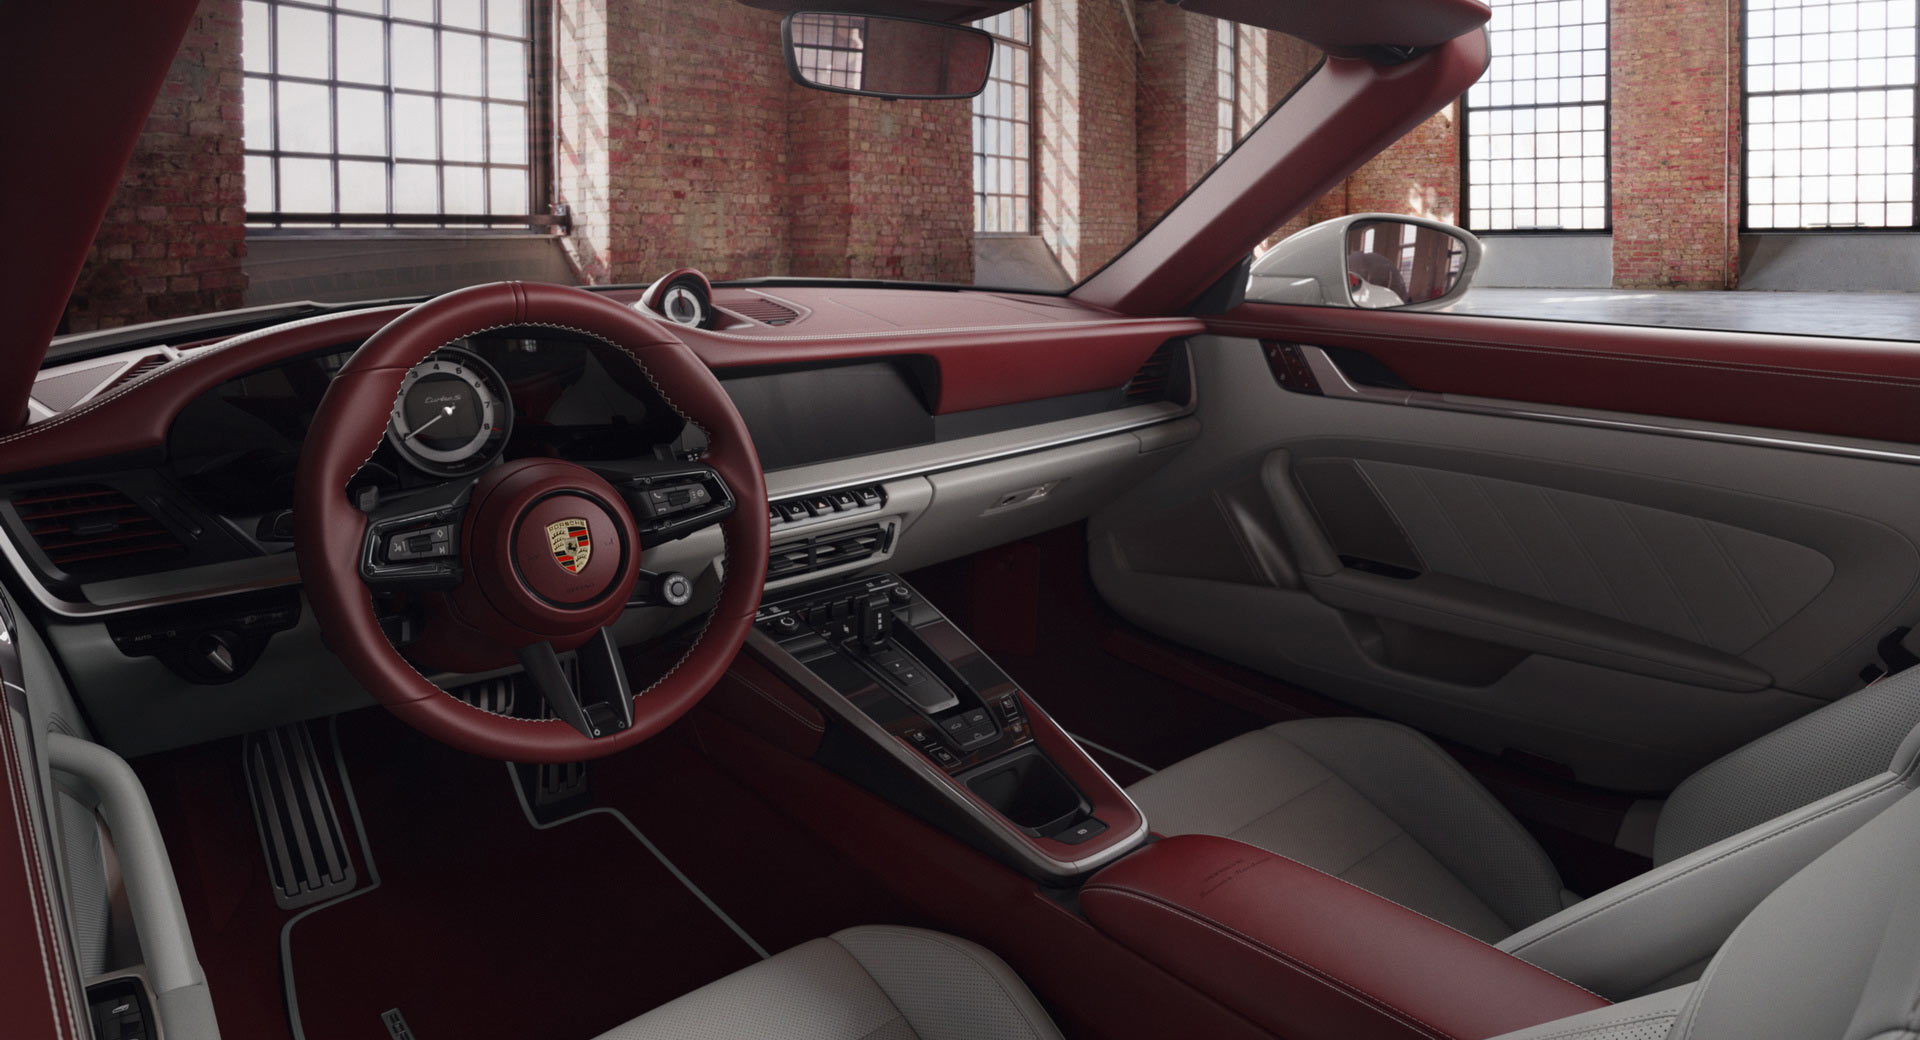 Meet The Perfect 911 Interior According To Porsche Exclusive